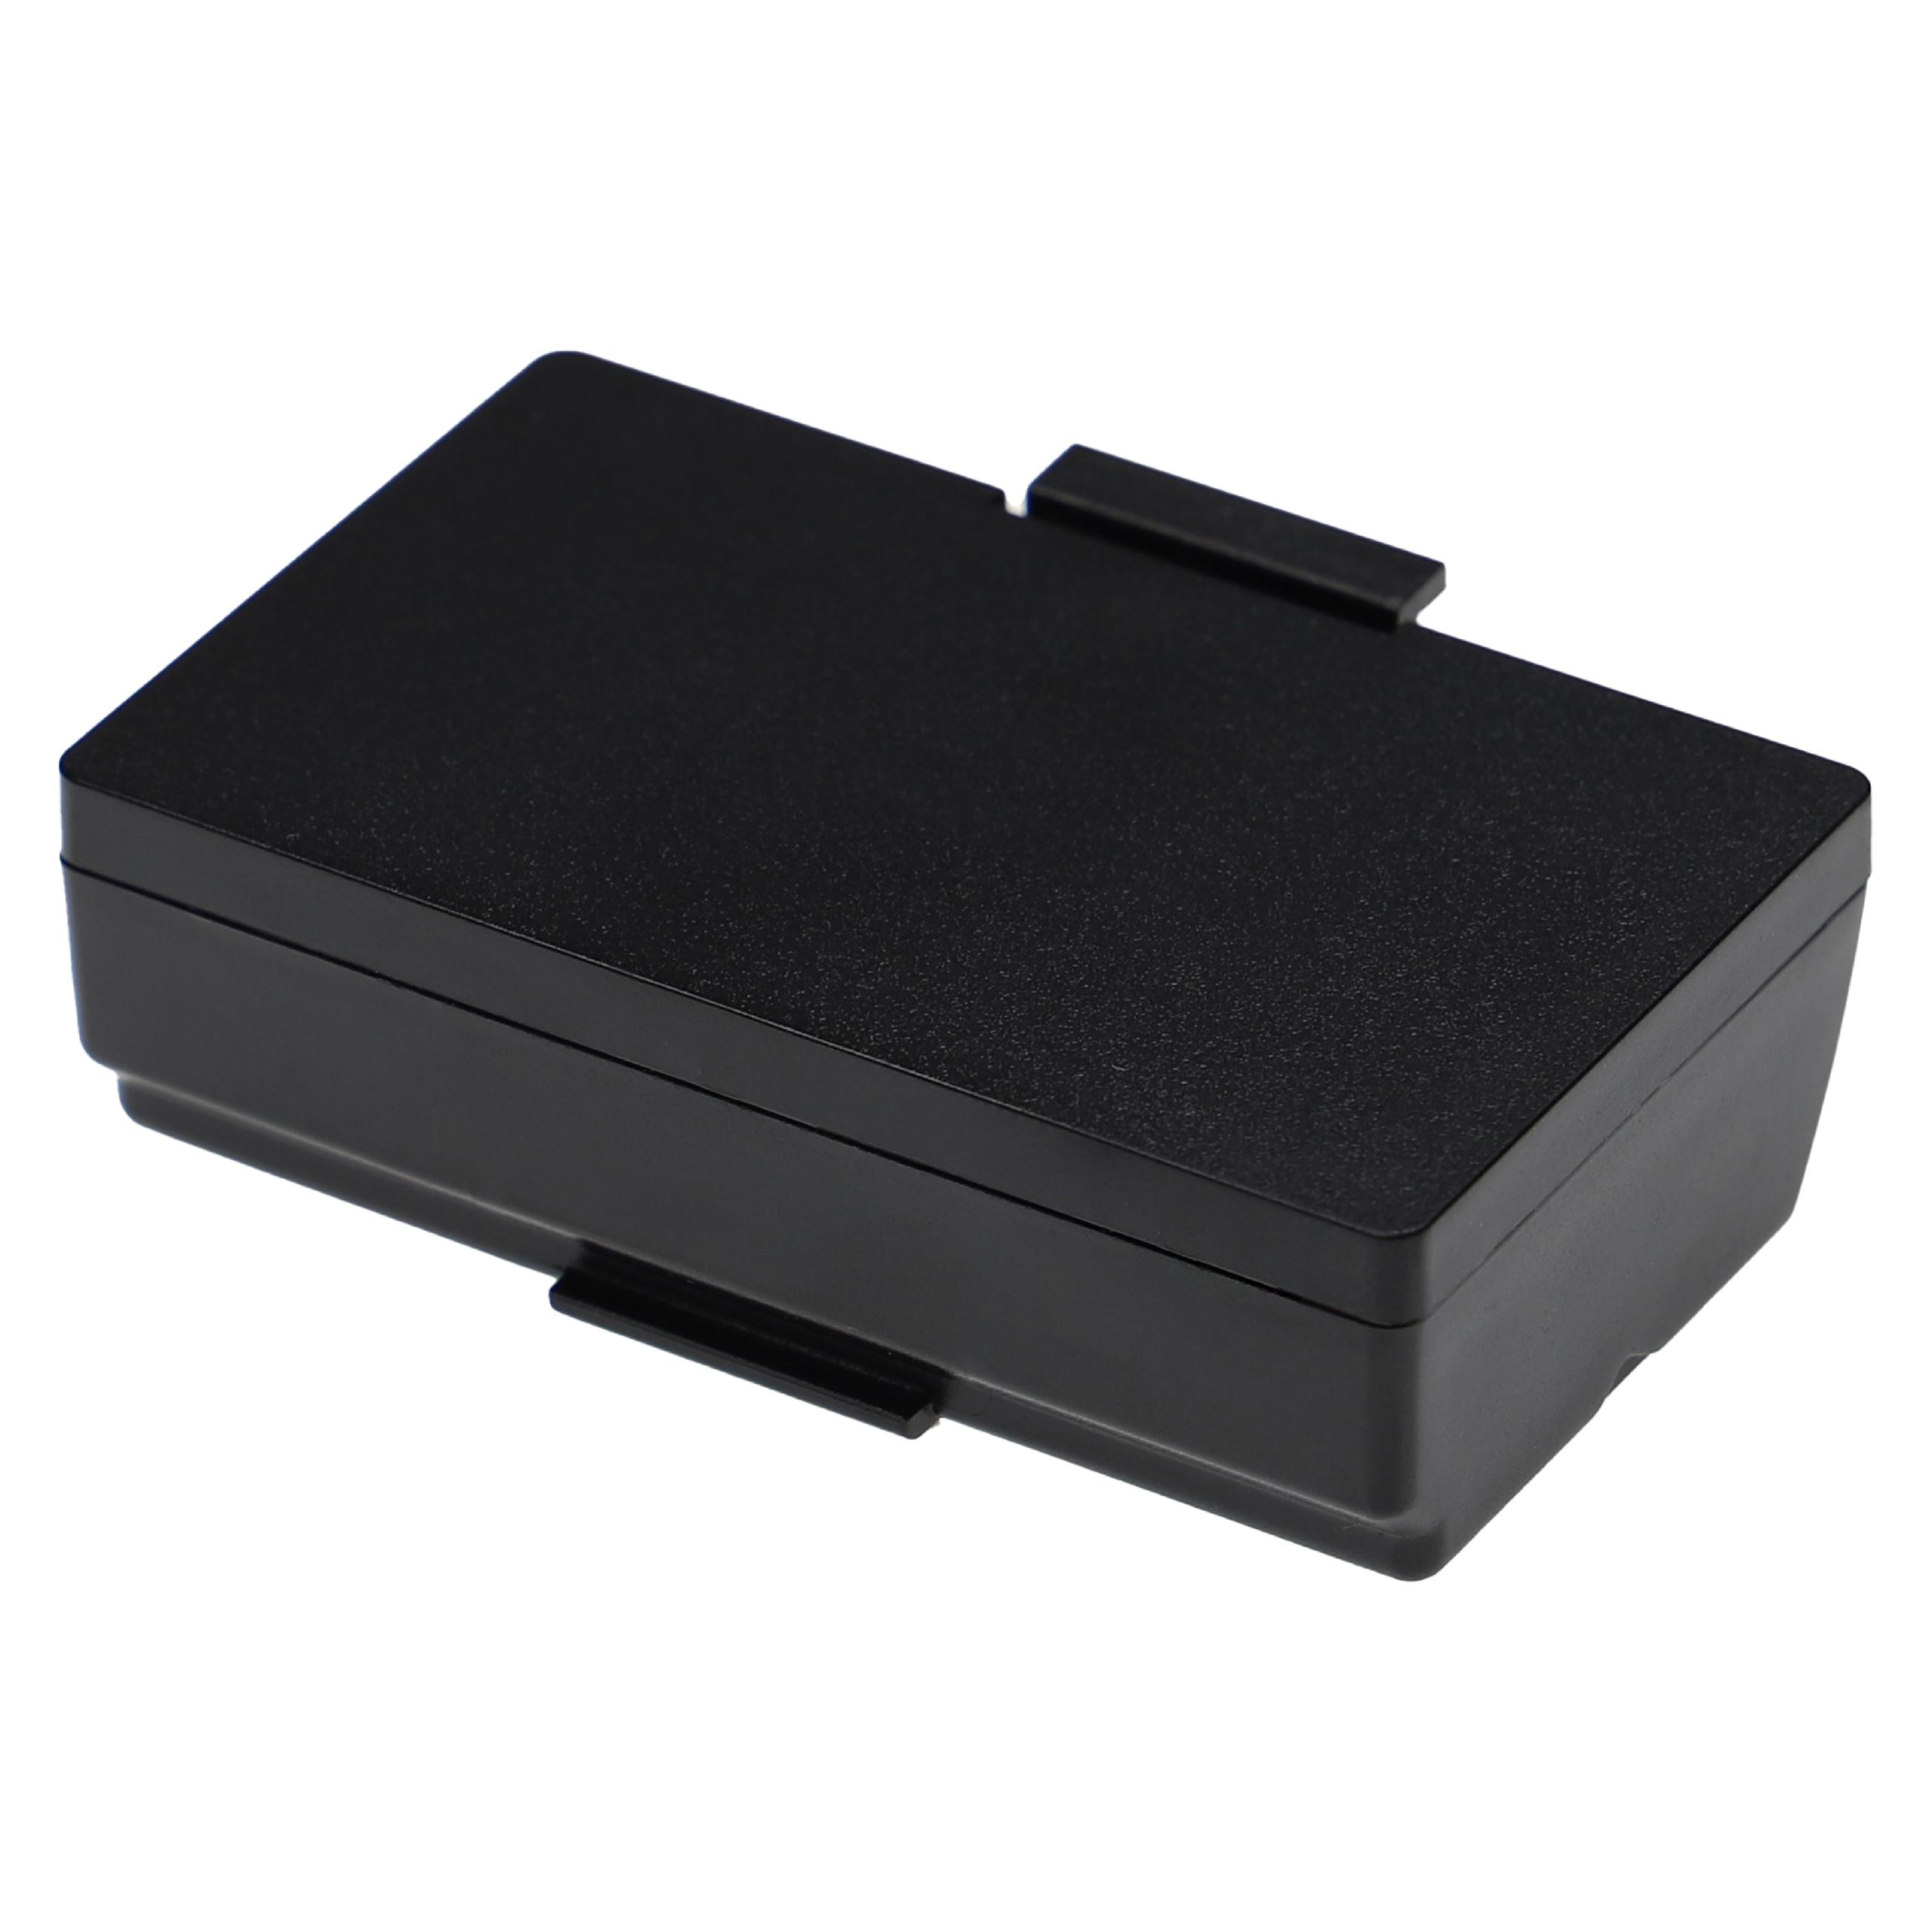 Akumulator do drukarki / drukarki etykiet zamiennik Bixolon PBP-R300 - 2600 mAh 7,4 V Li-Ion